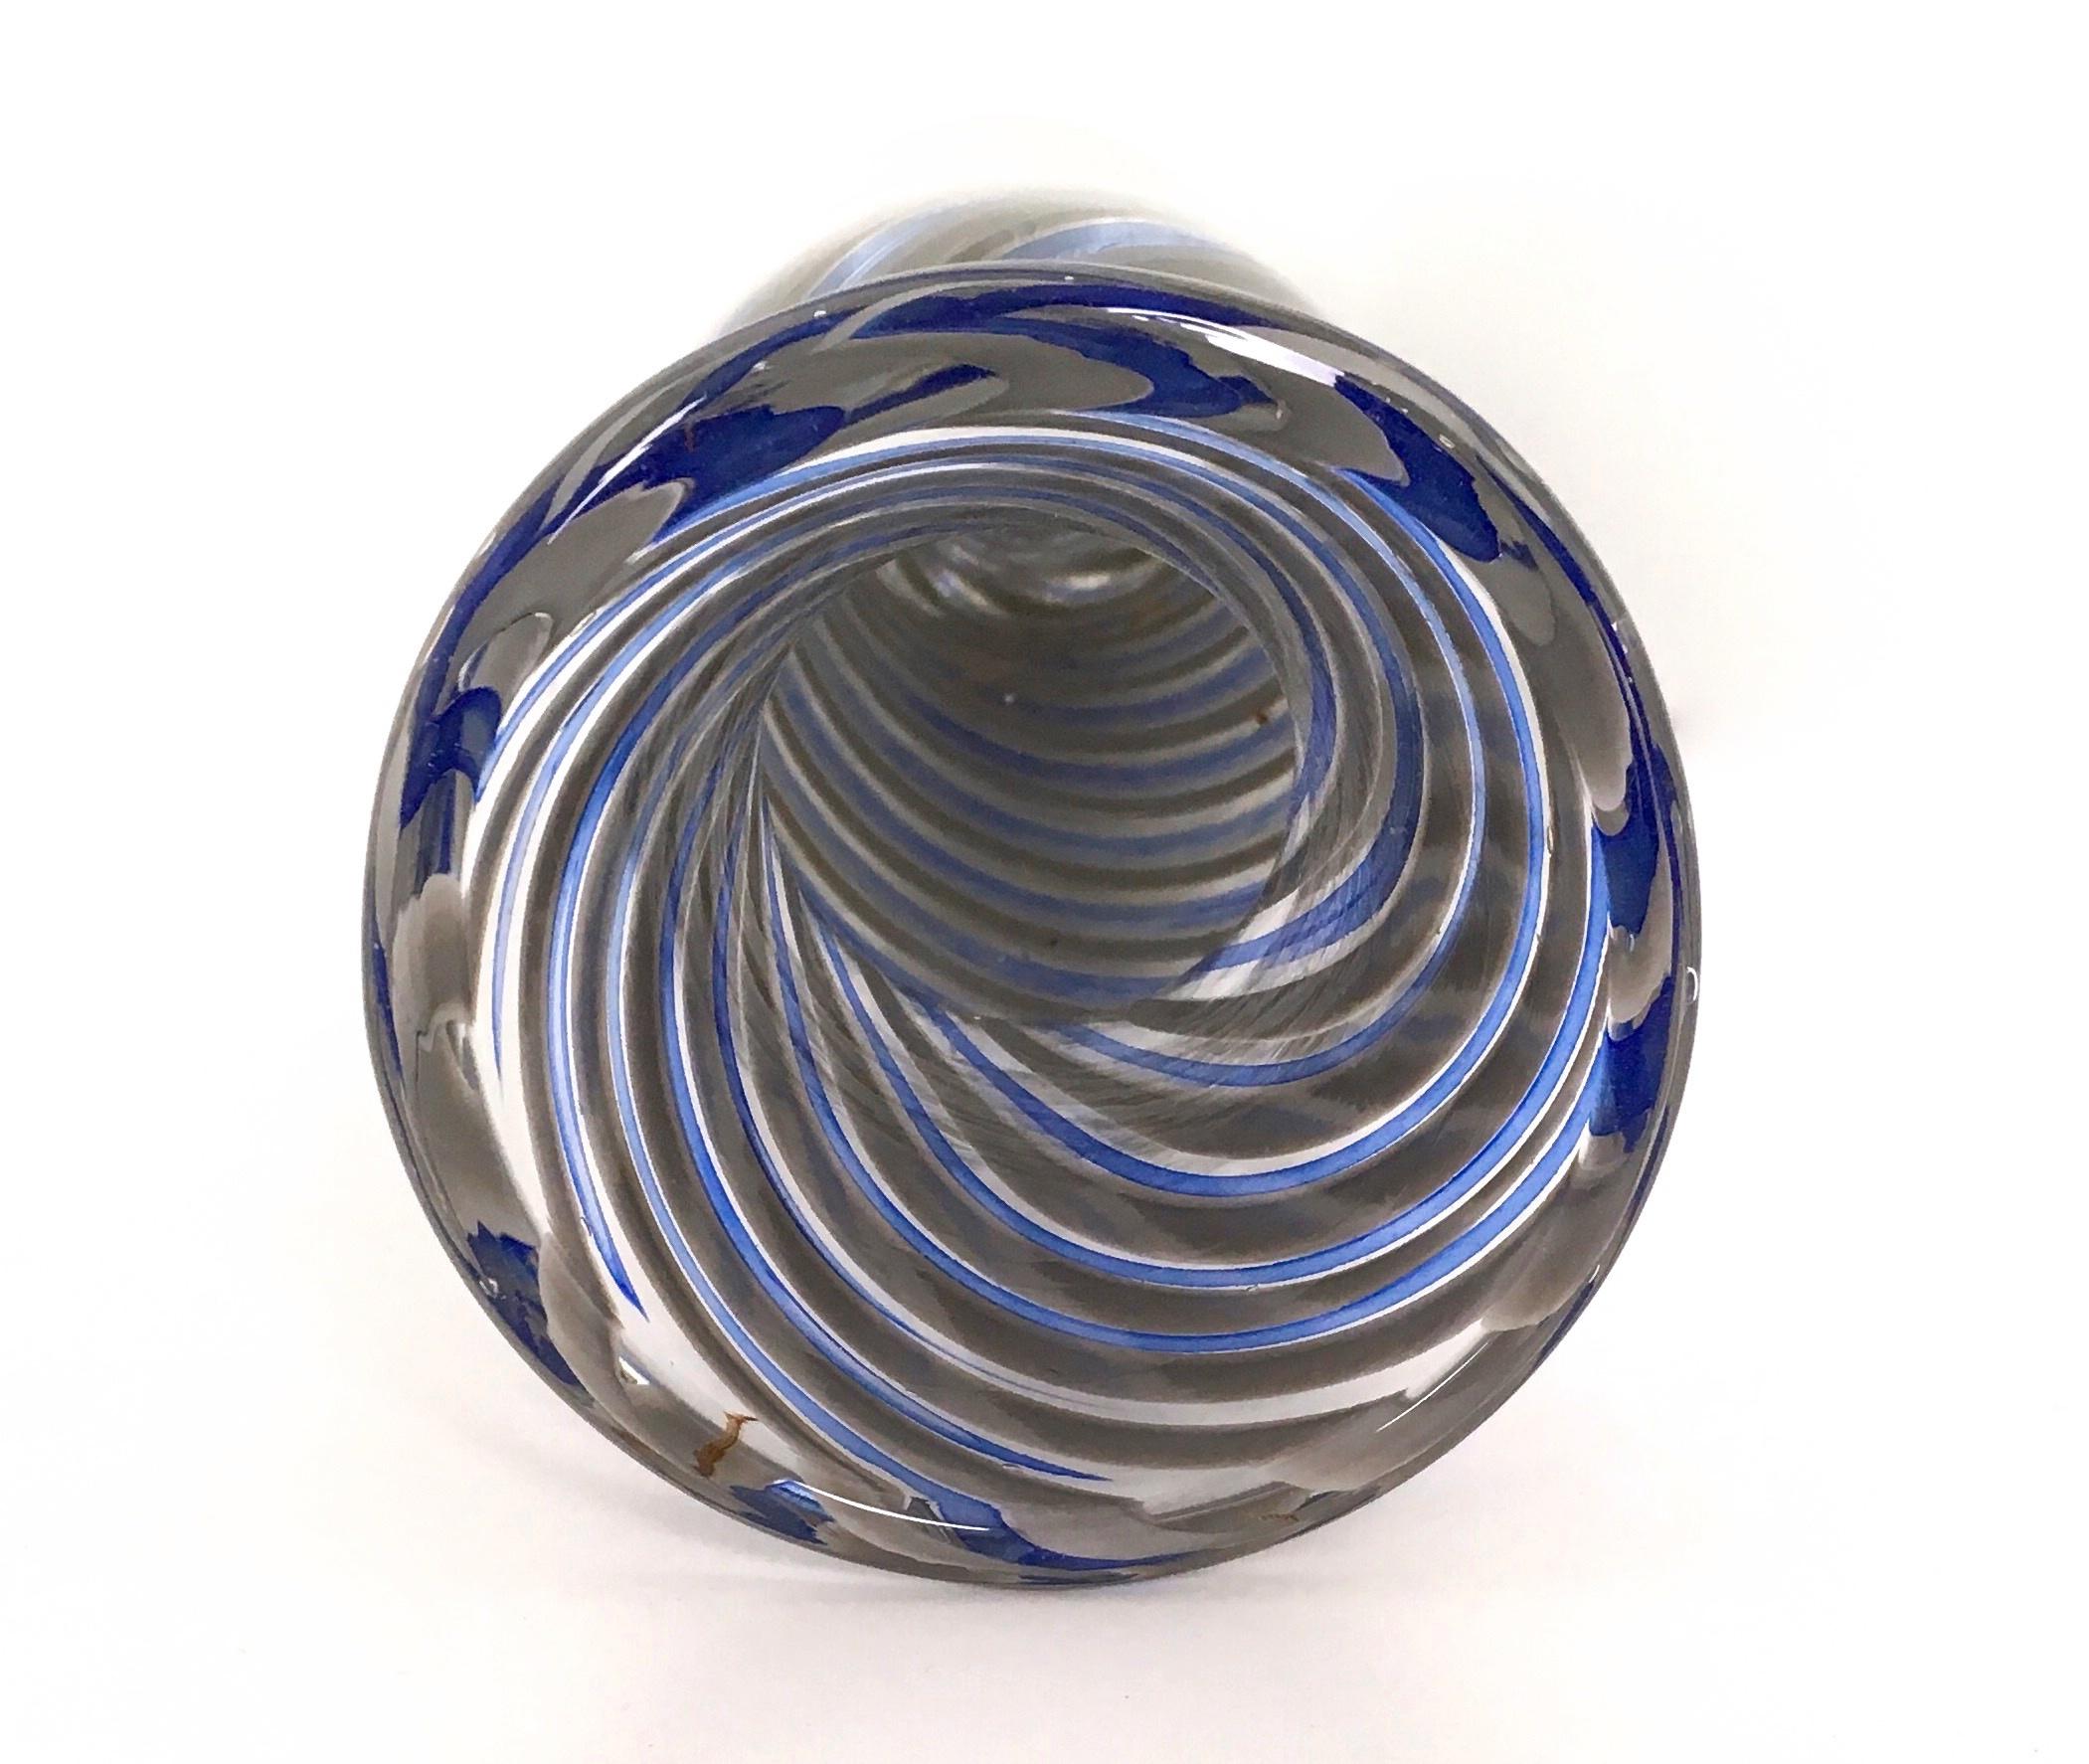 Italian Midcentury Blue and Gray Murano Glass Vase, Italy, 1960s